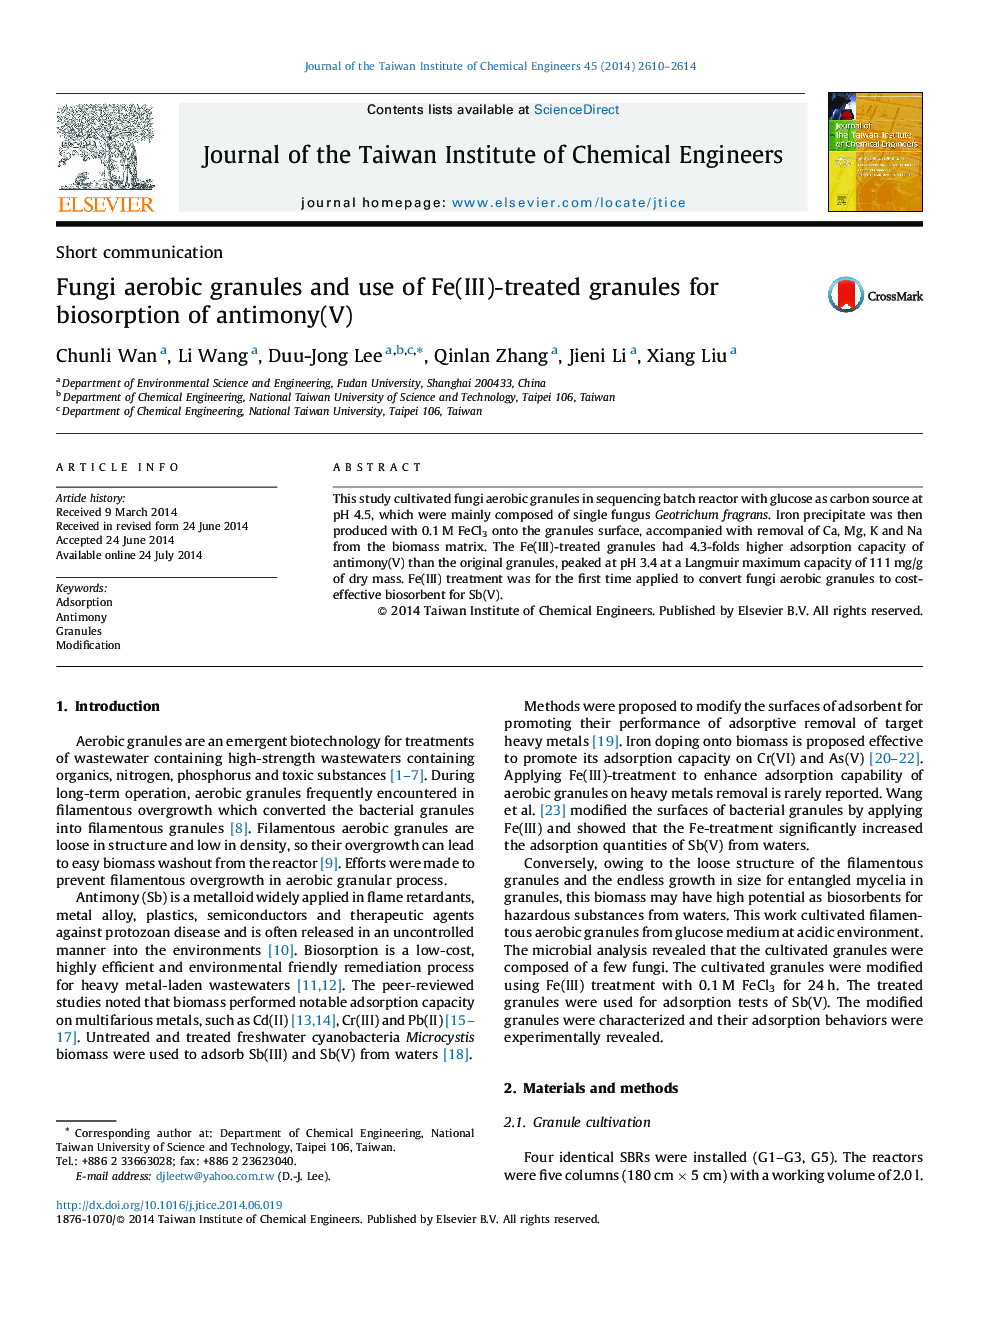 Fungi aerobic granules and use of Fe(III)-treated granules for biosorption of antimony(V)